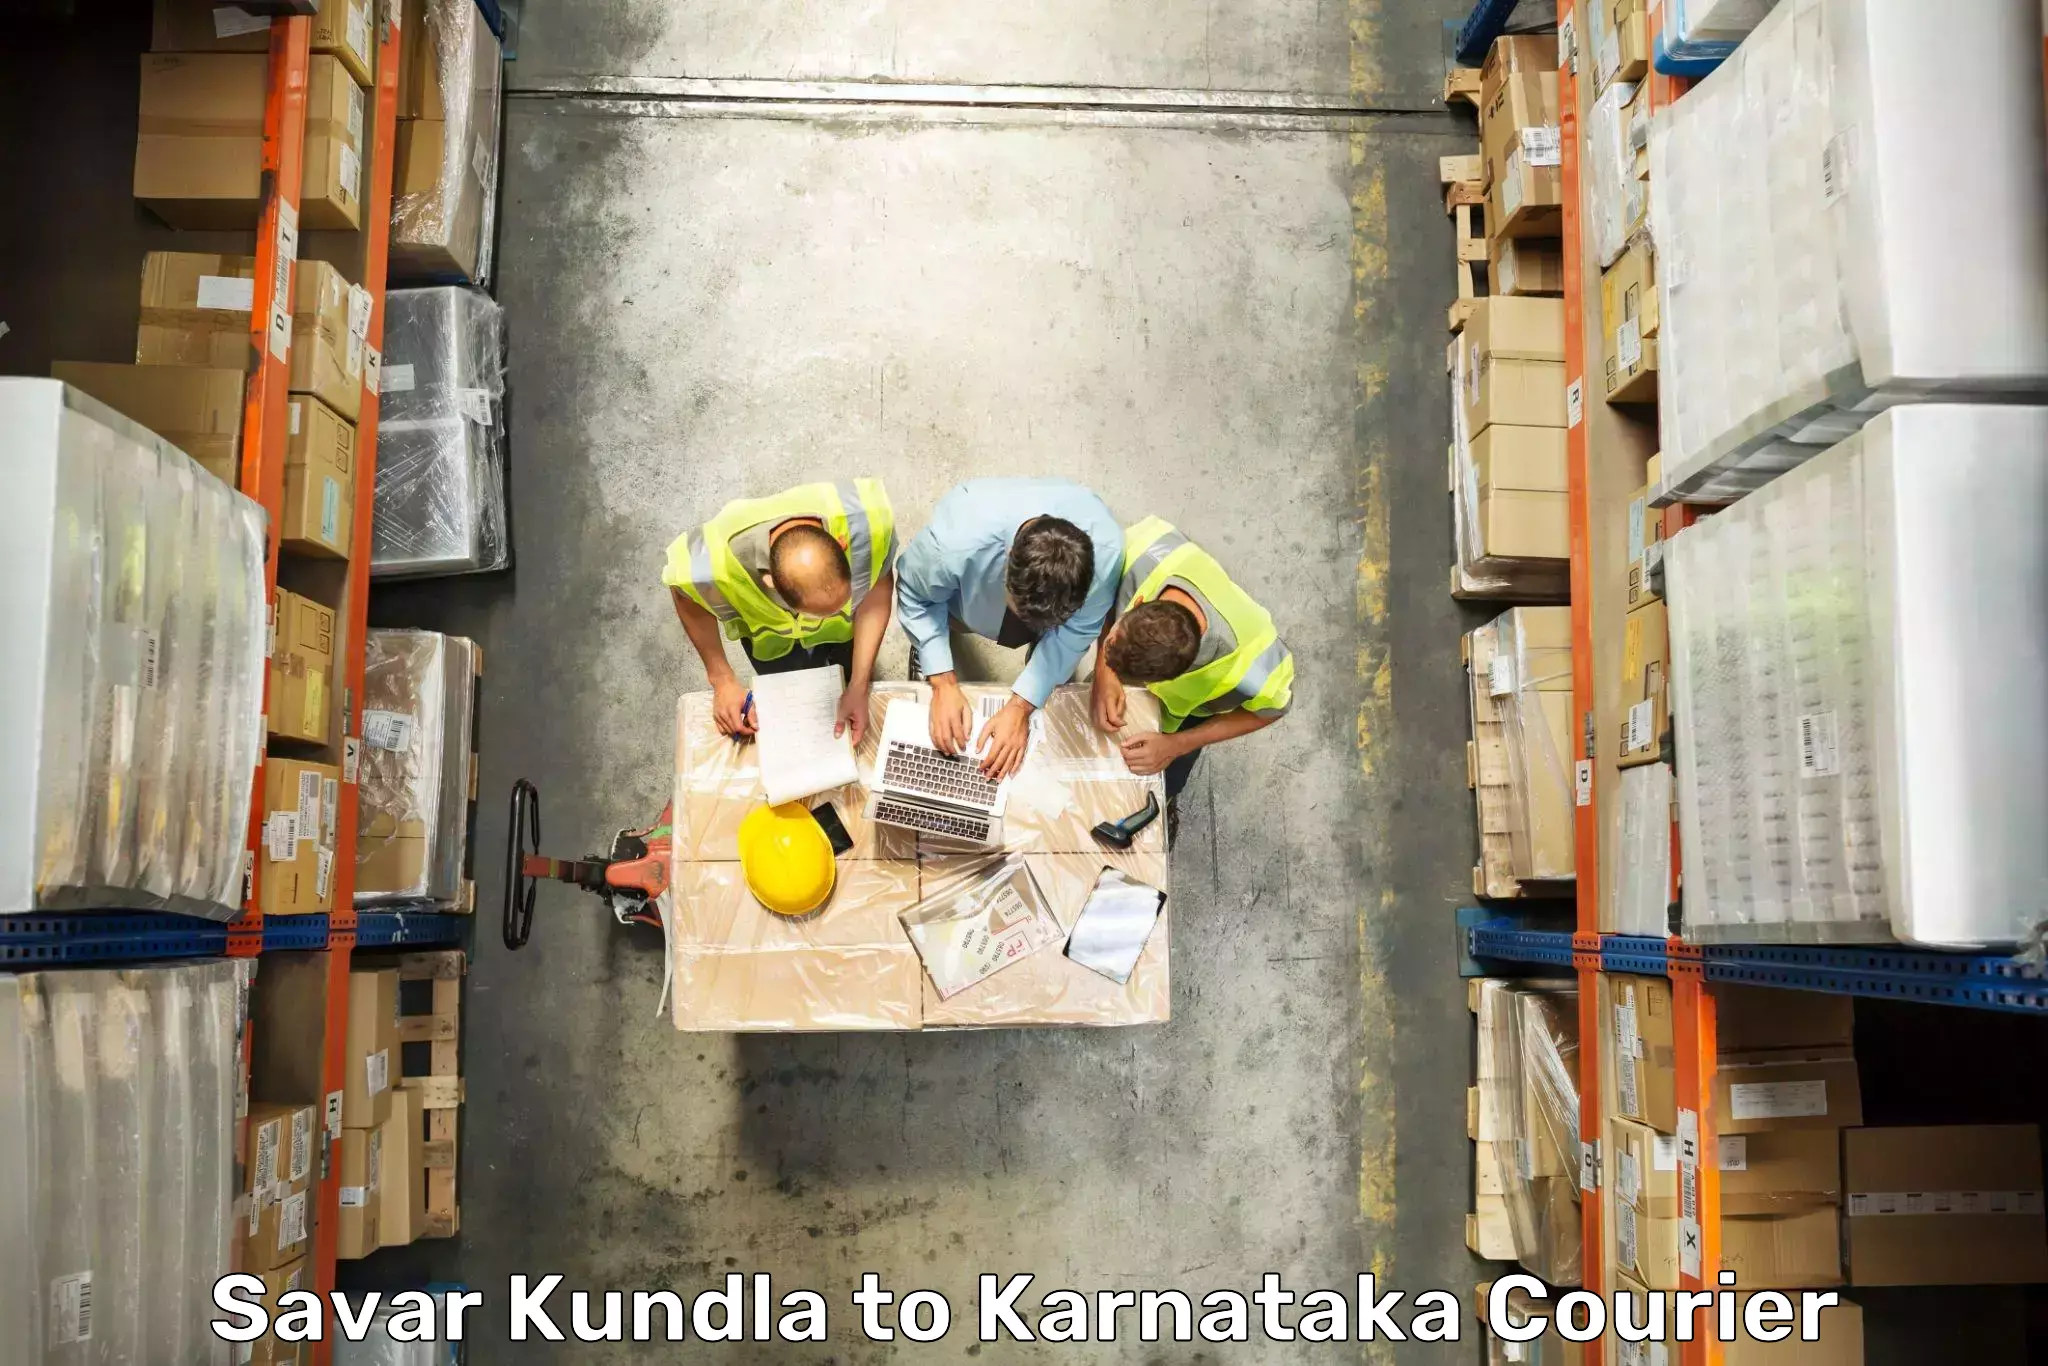 Luggage shipment specialists Savar Kundla to Karnataka